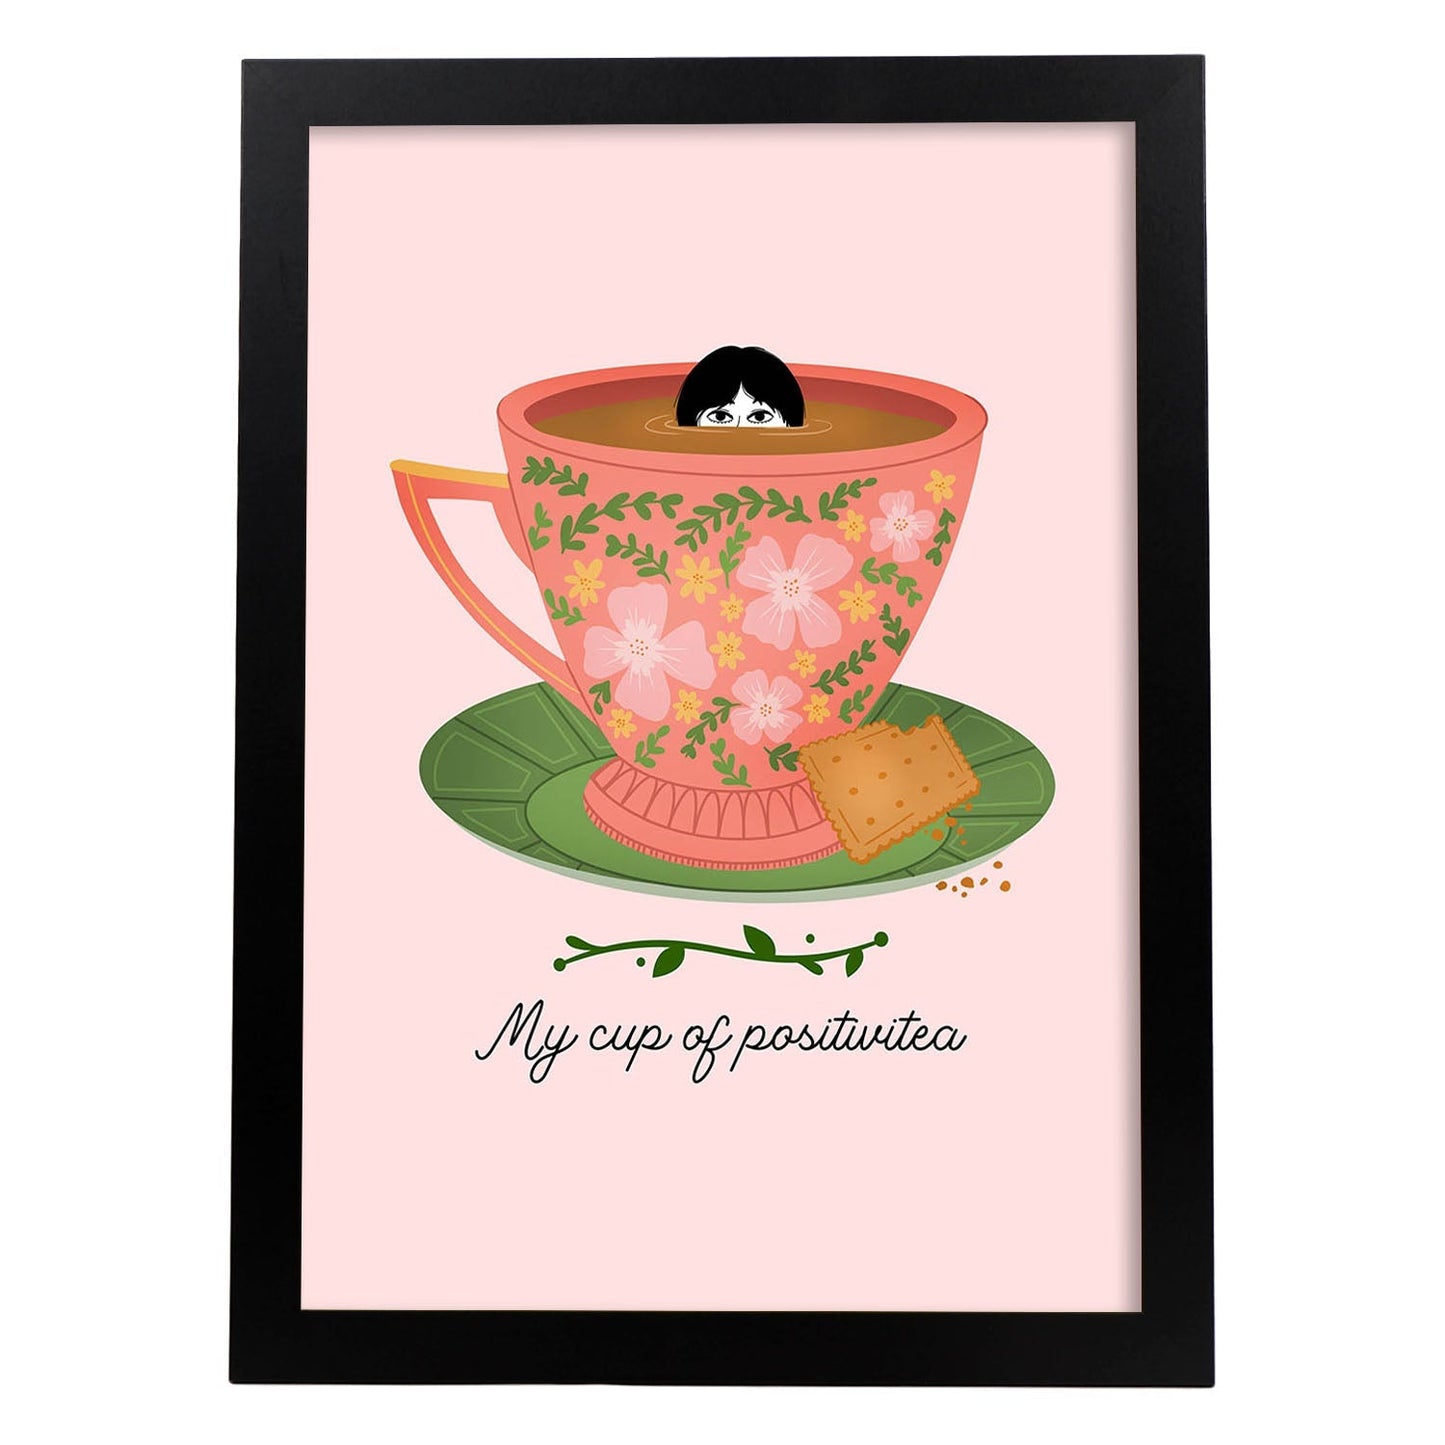 Set de láminas Té positivo. Pósters con ilustraciones para amantes del té y el café.-Artwork-Nacnic-A3-Marco Negro-Nacnic Estudio SL